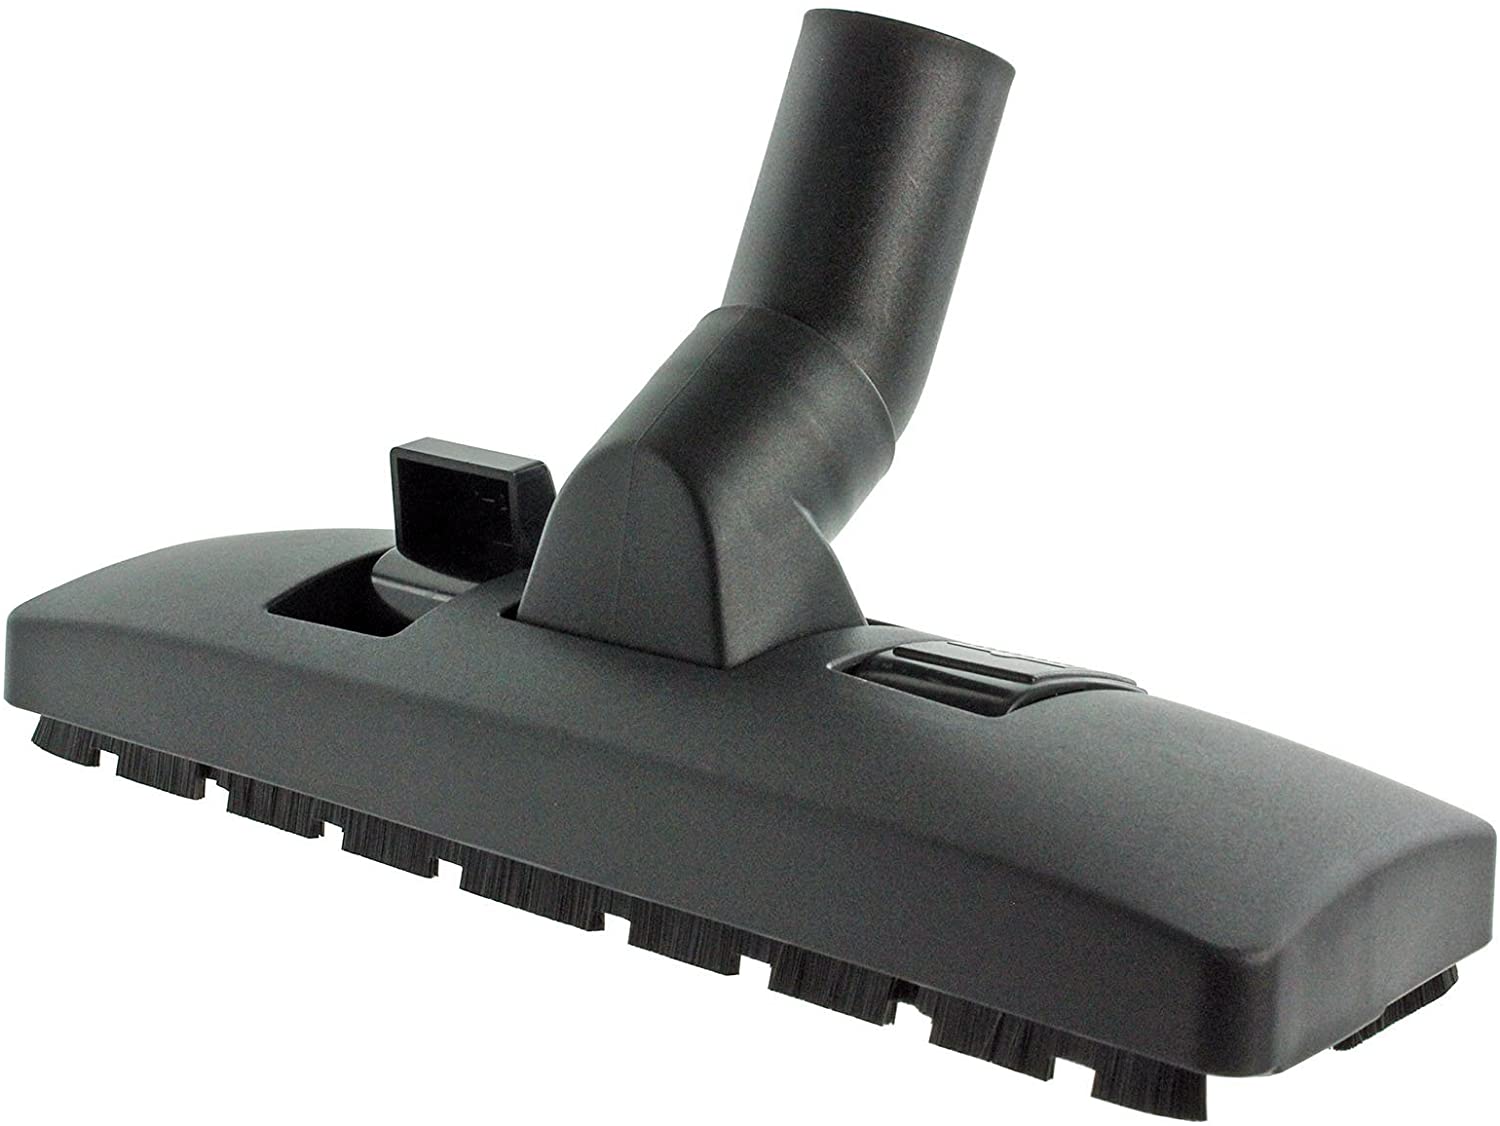 Adjustable Telescopic Pipe and Carpet/Hard Floor Brush Head for NUMATIC HENRY HETTY Vacuum Cleaner Rod (32mm)